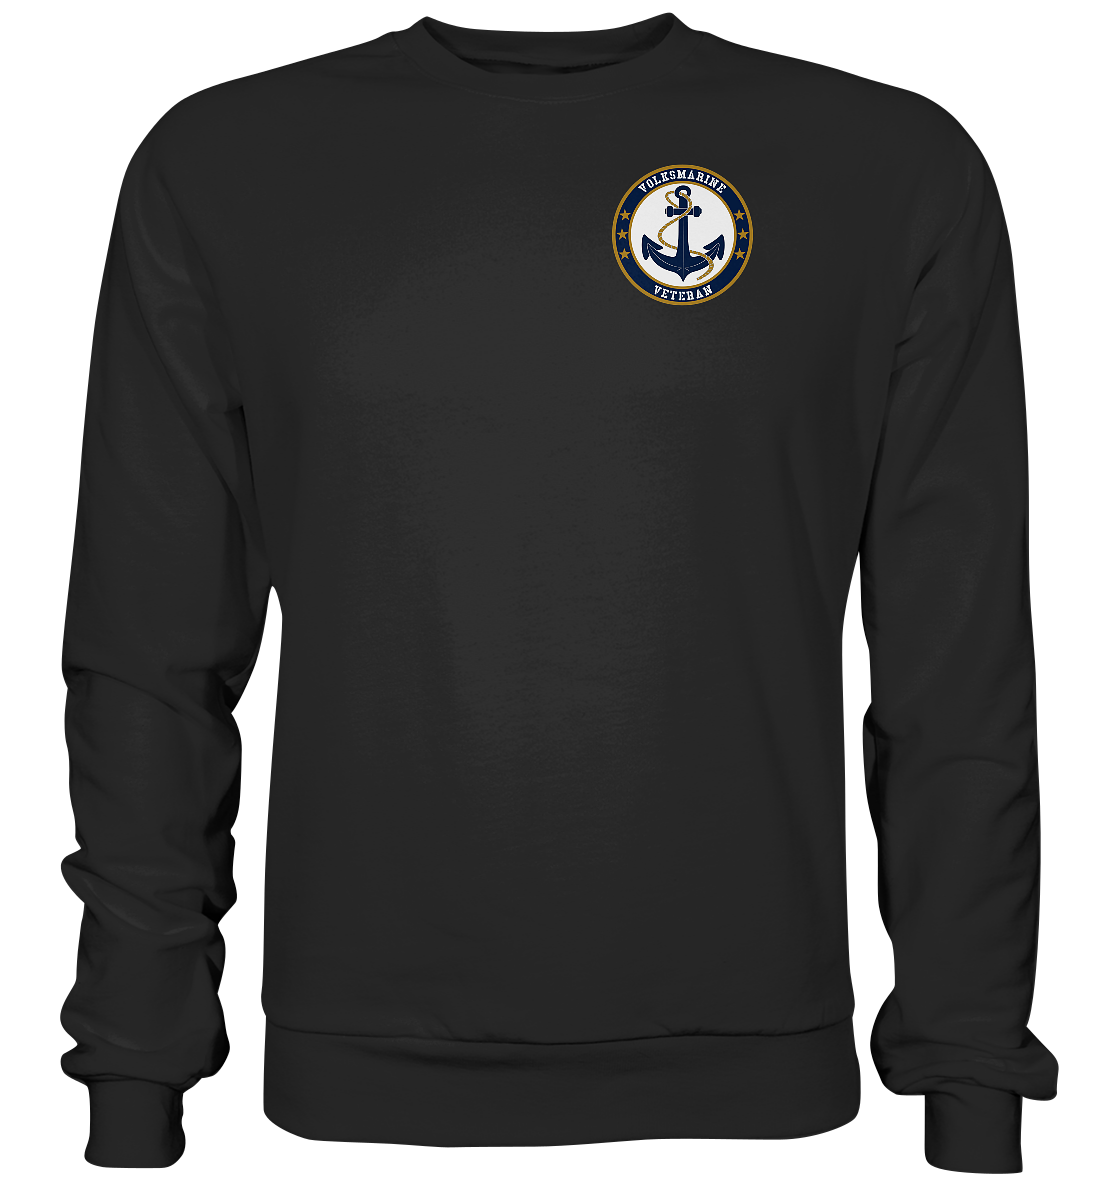 VOLKSMARINE Marine Veteran Brustlogo - Premium Sweatshirt